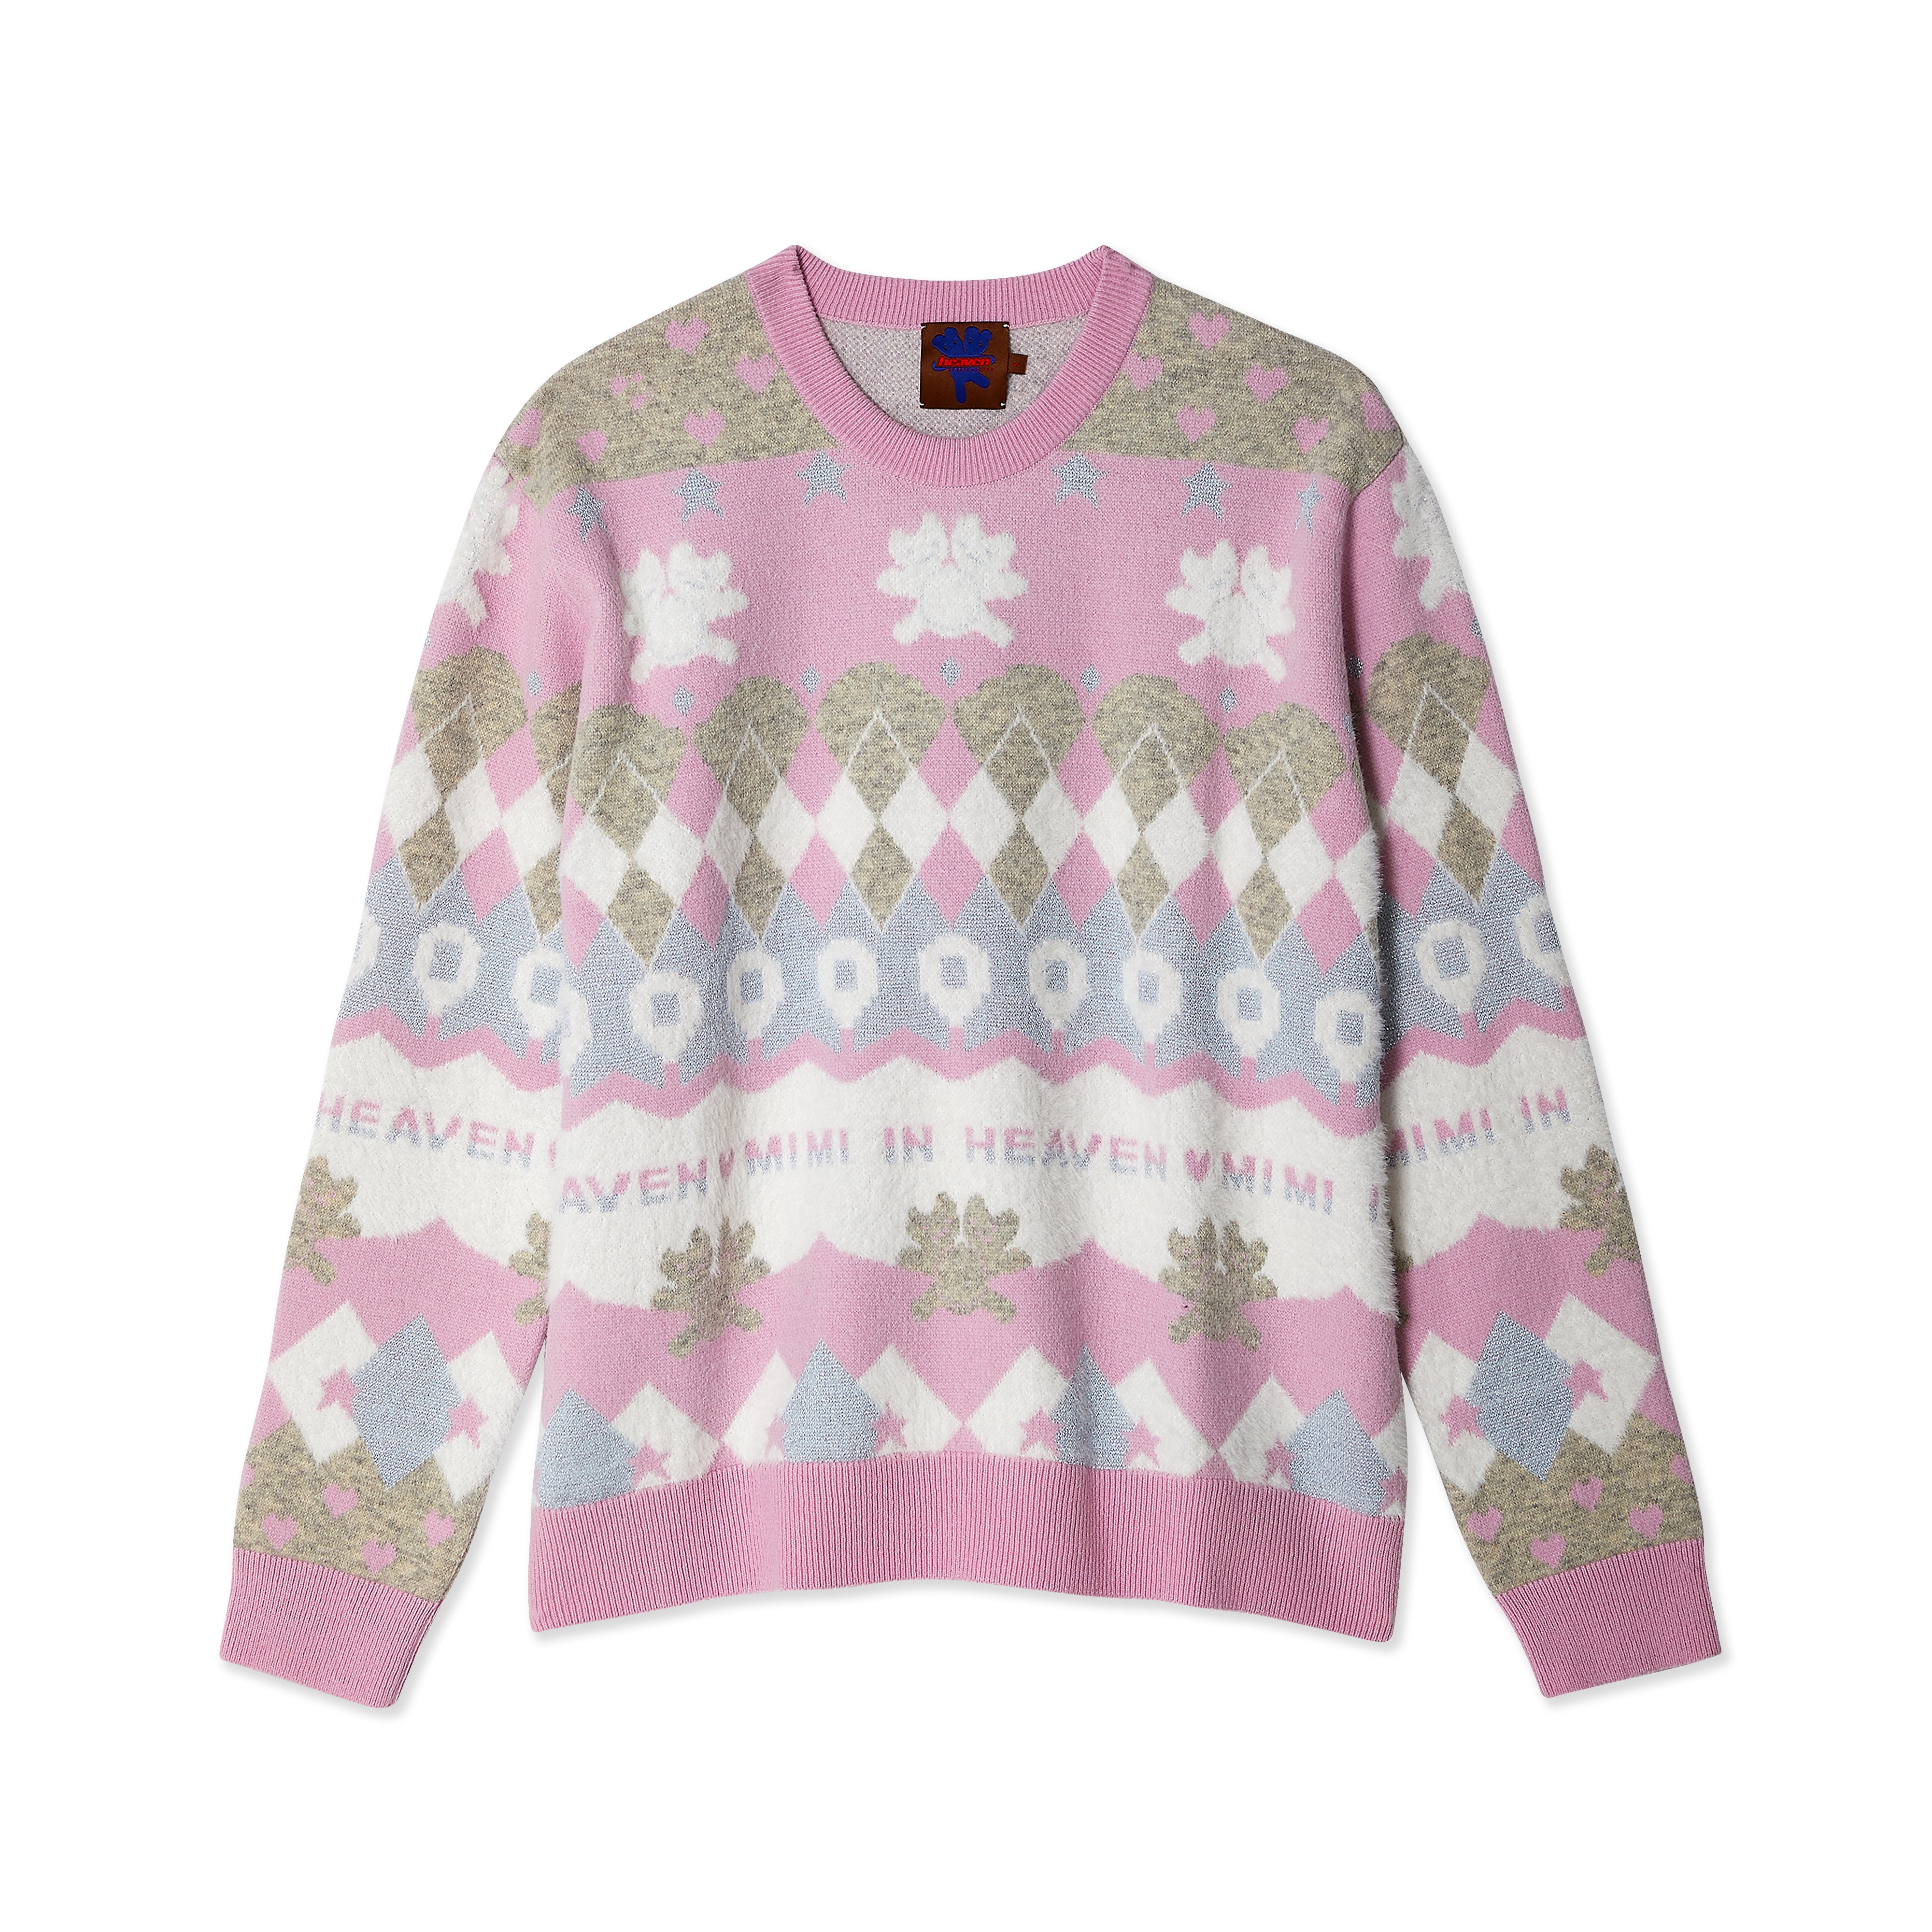 Marc Jacobs - Women’s Mini in Heaven Brushed Sweater - (Pinkmul)